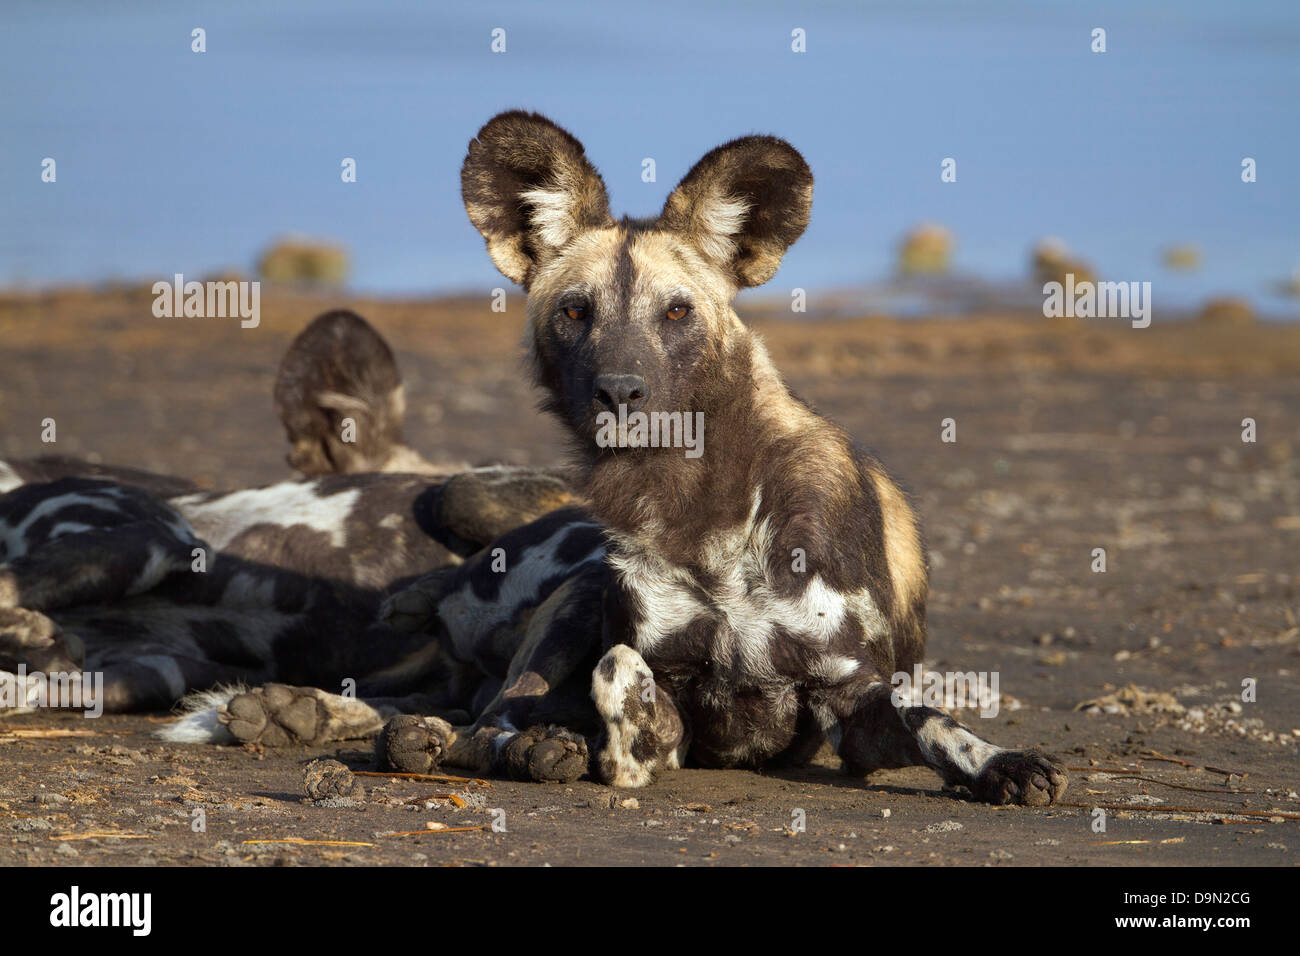 African wild dog close up portrait, Serengeti, Tanzania Stock Photo